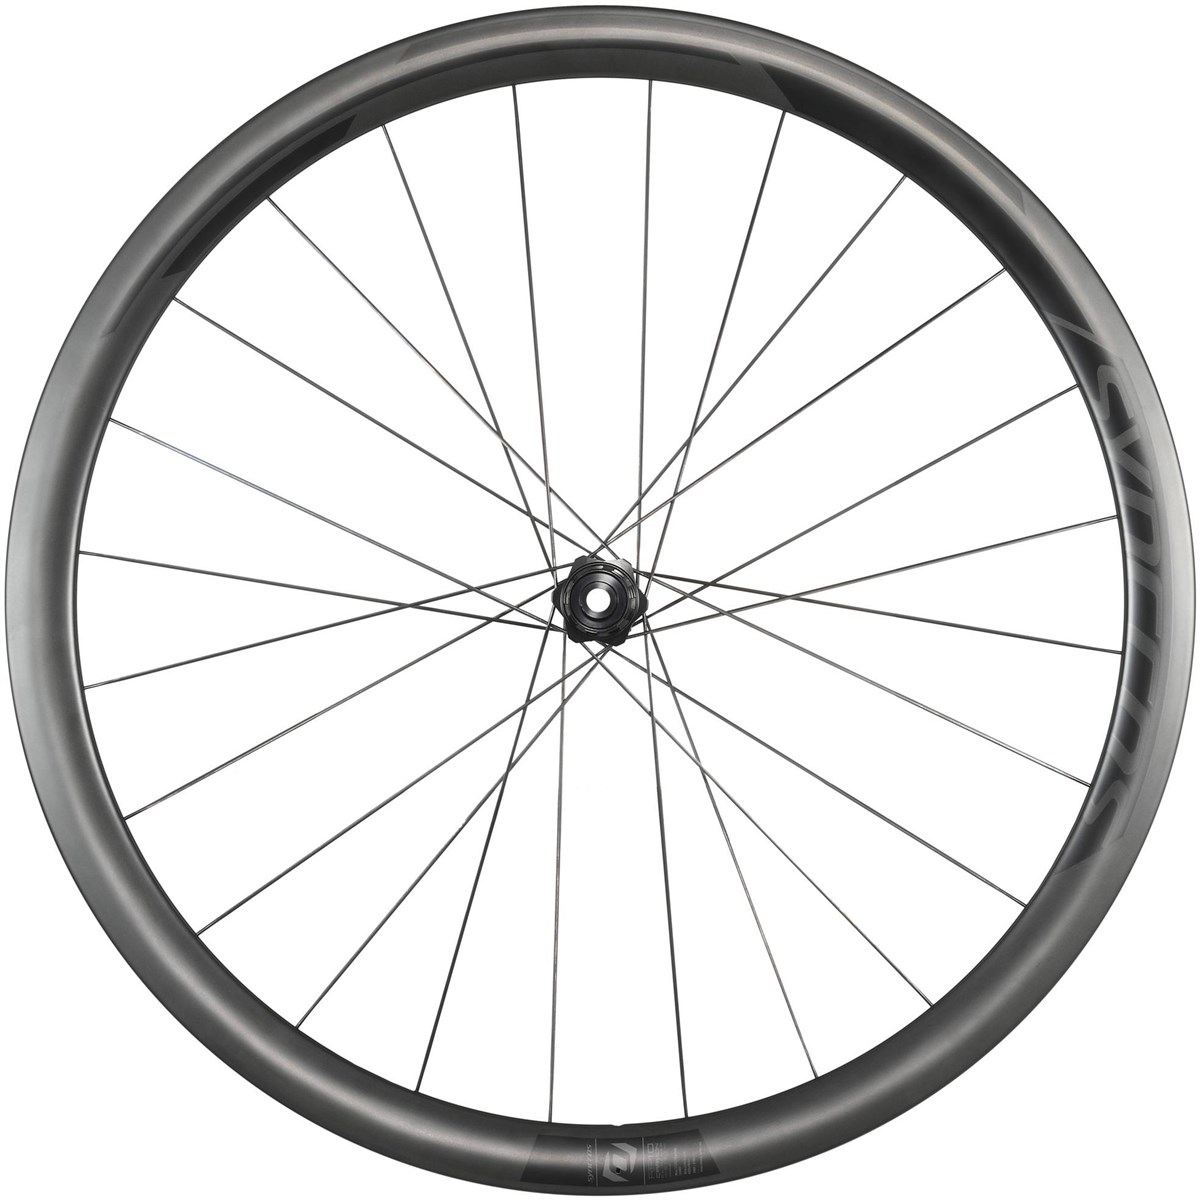 Syncros RP 1.0 Disc Carbon Rear Road Wheel